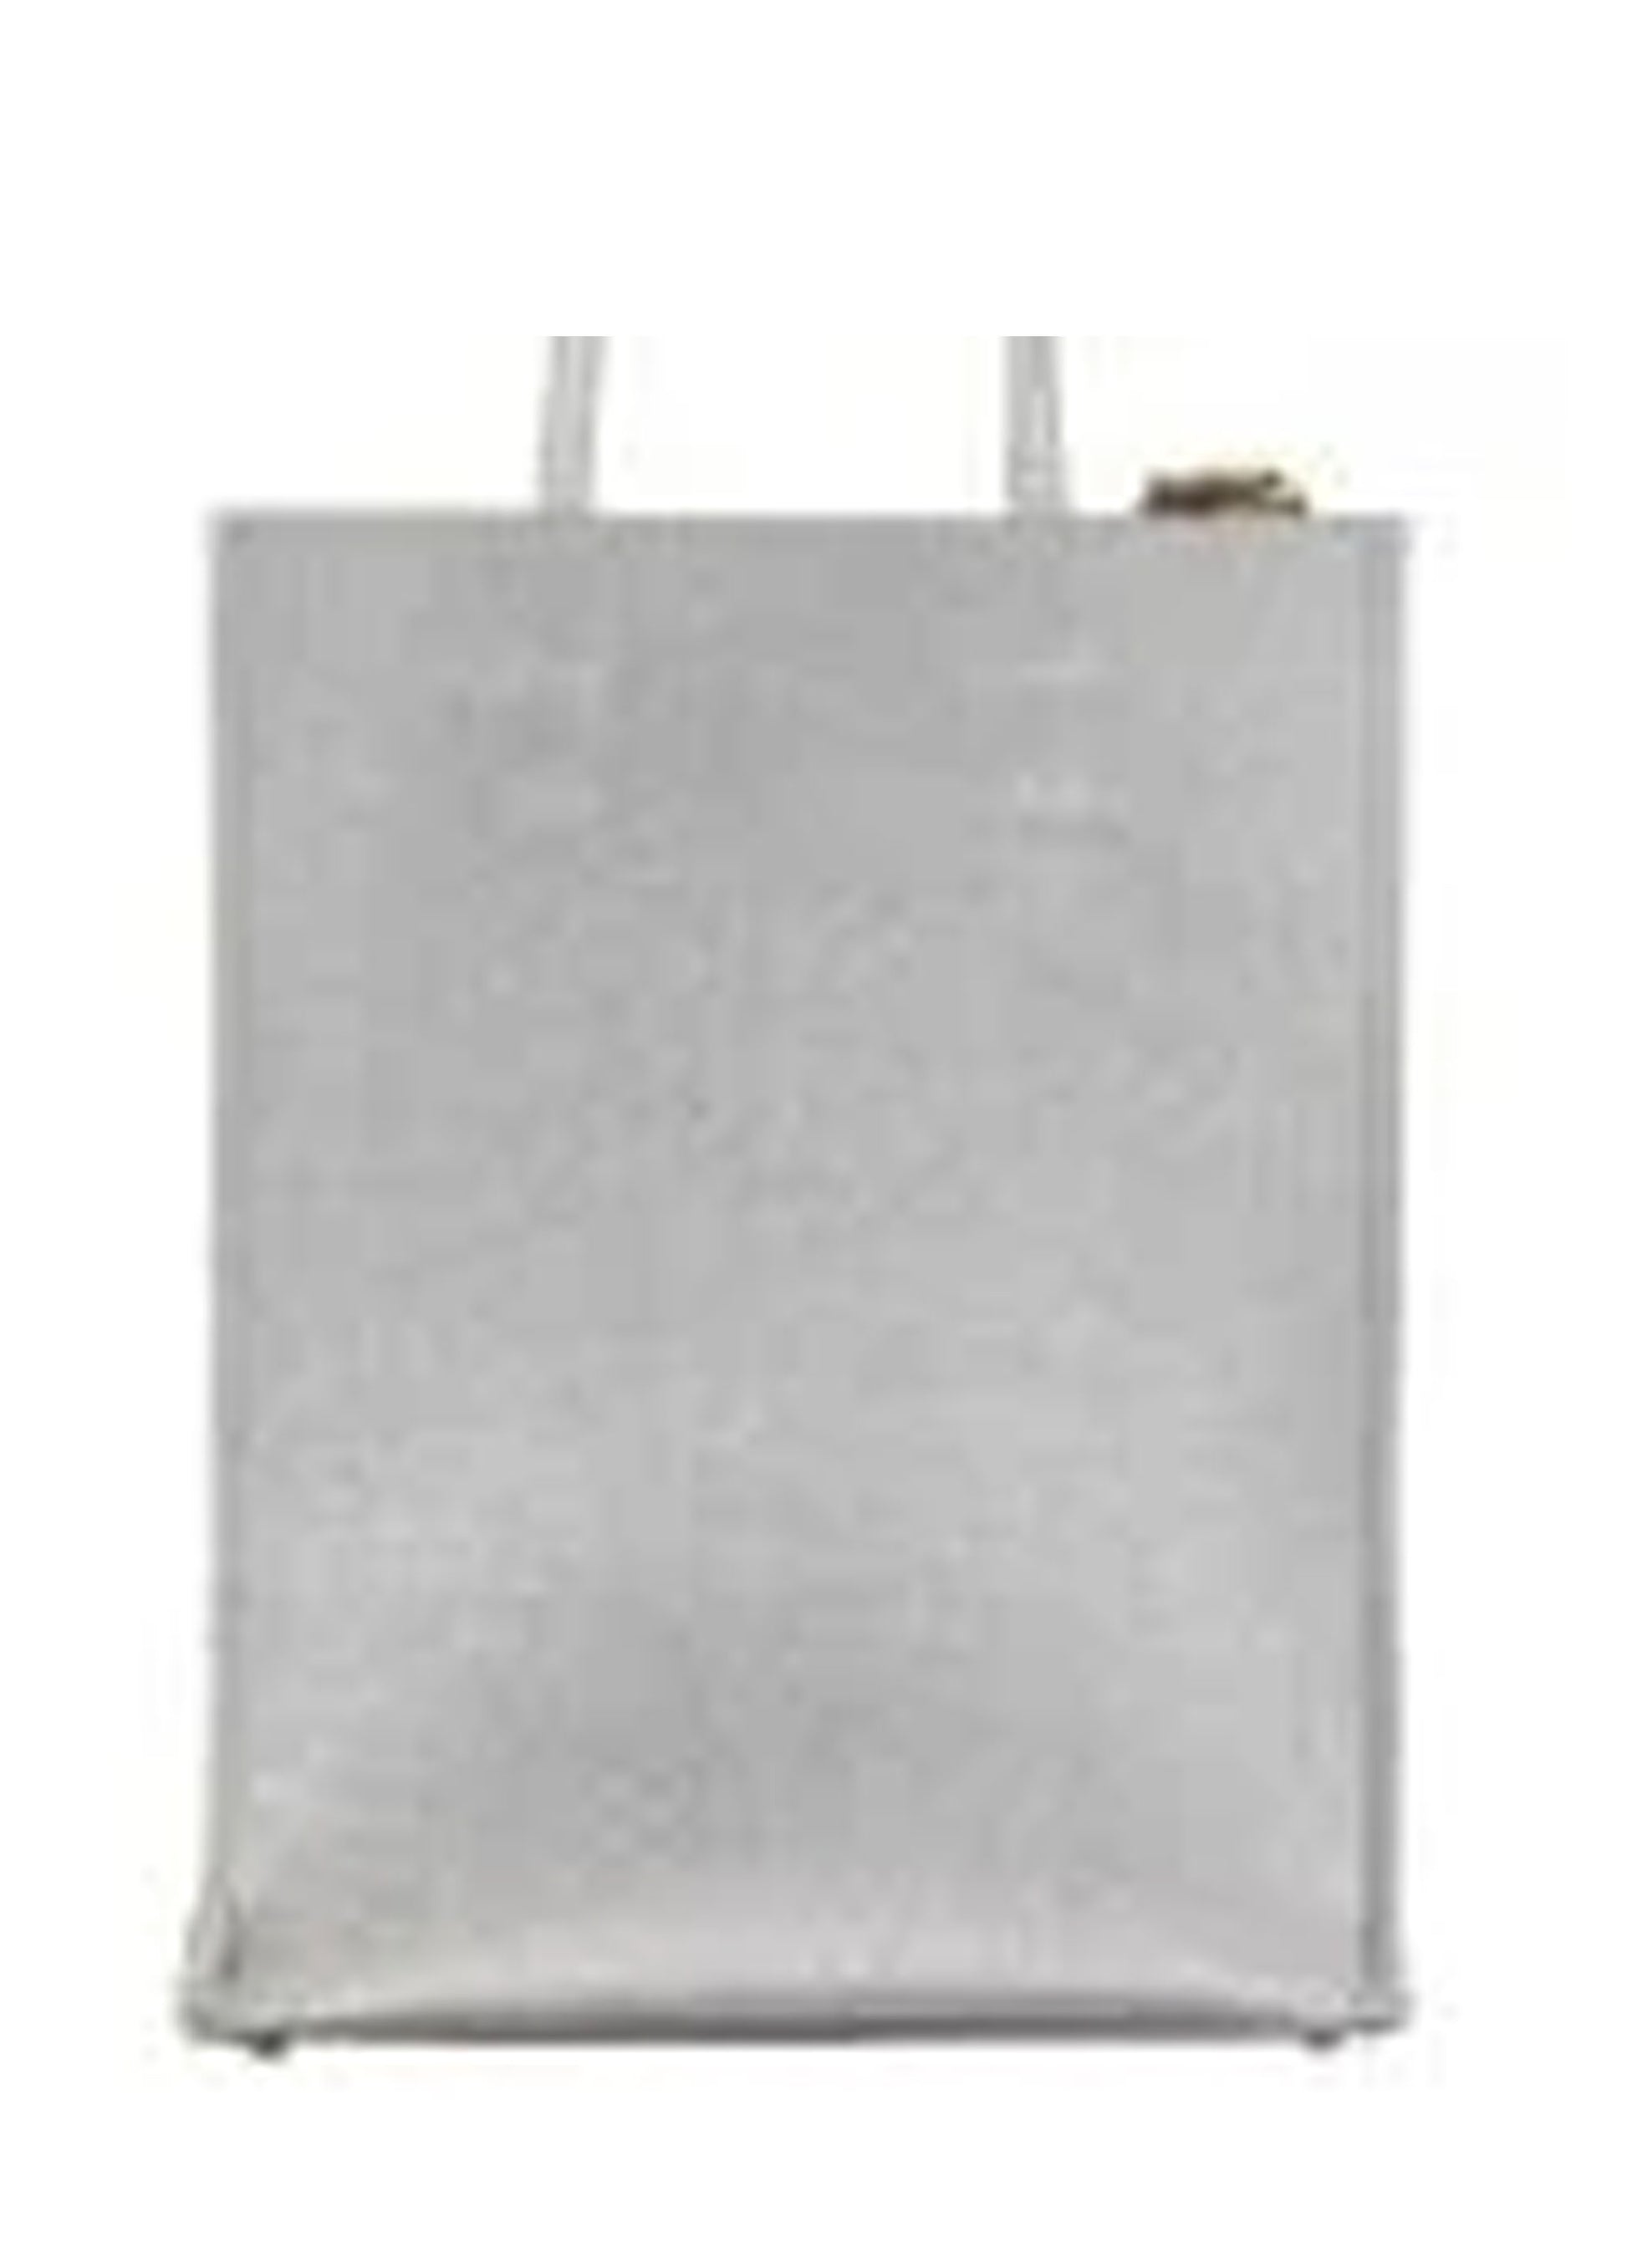 N21 Shopping Bag / Logo Tote - Silver Glitter Pink Tartan